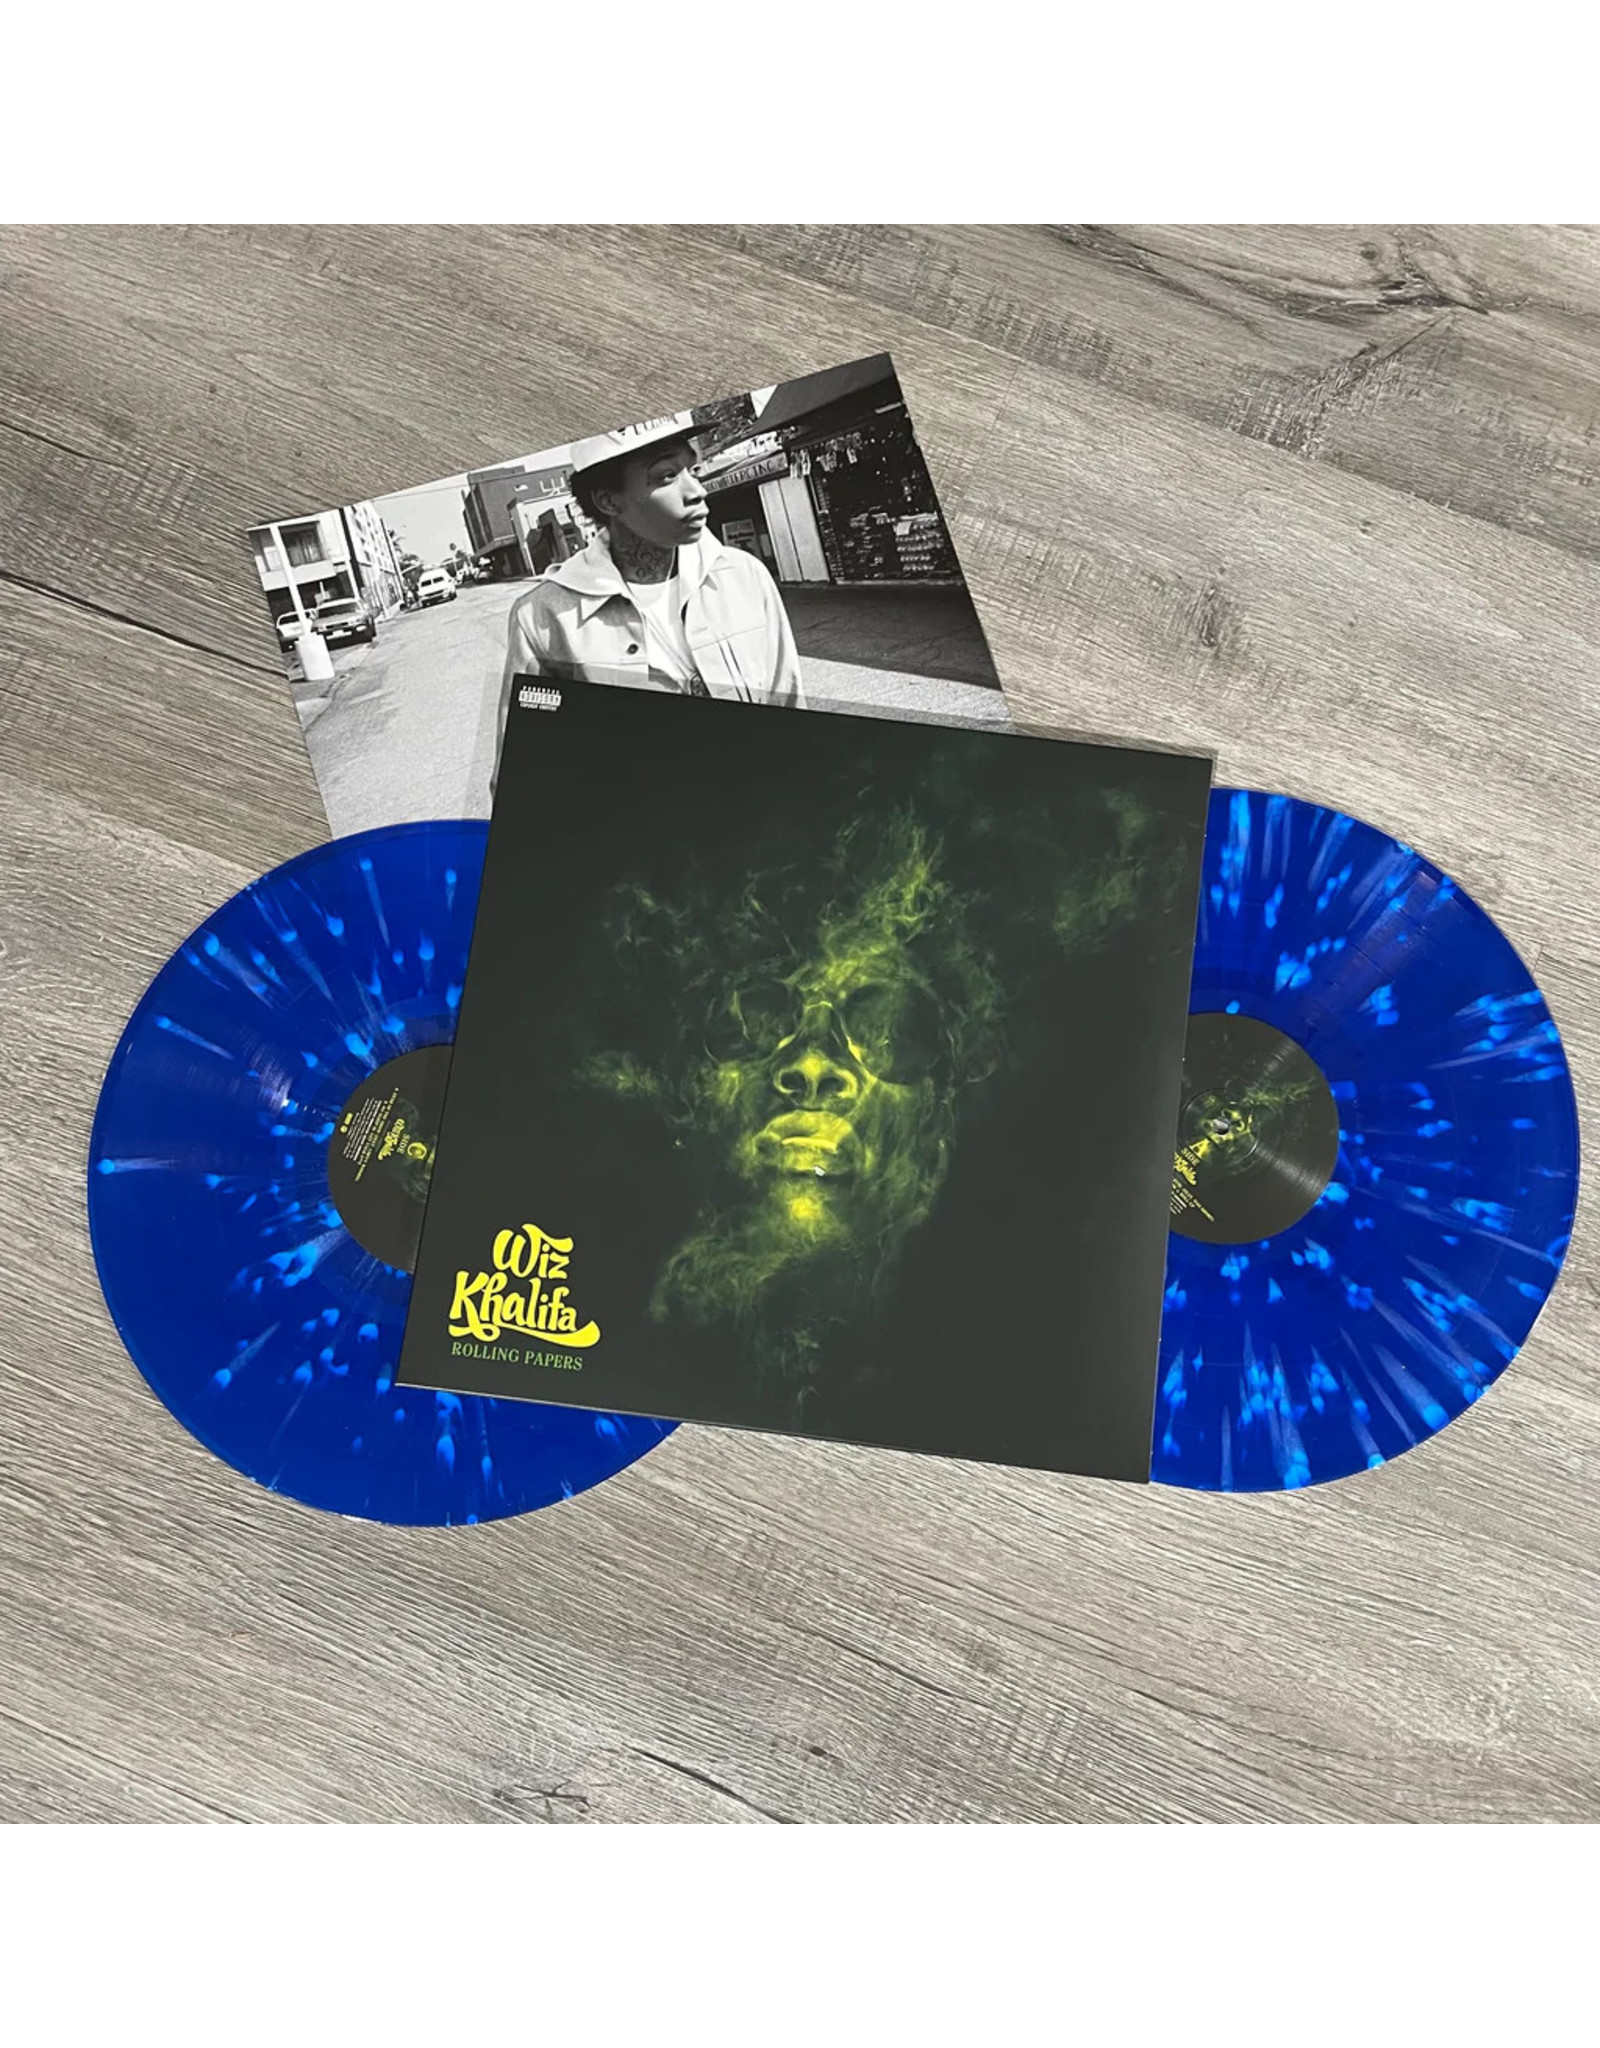 Wiz Khalifa - Rolling Papers (10th Anniversary) [Blue Vinyl]